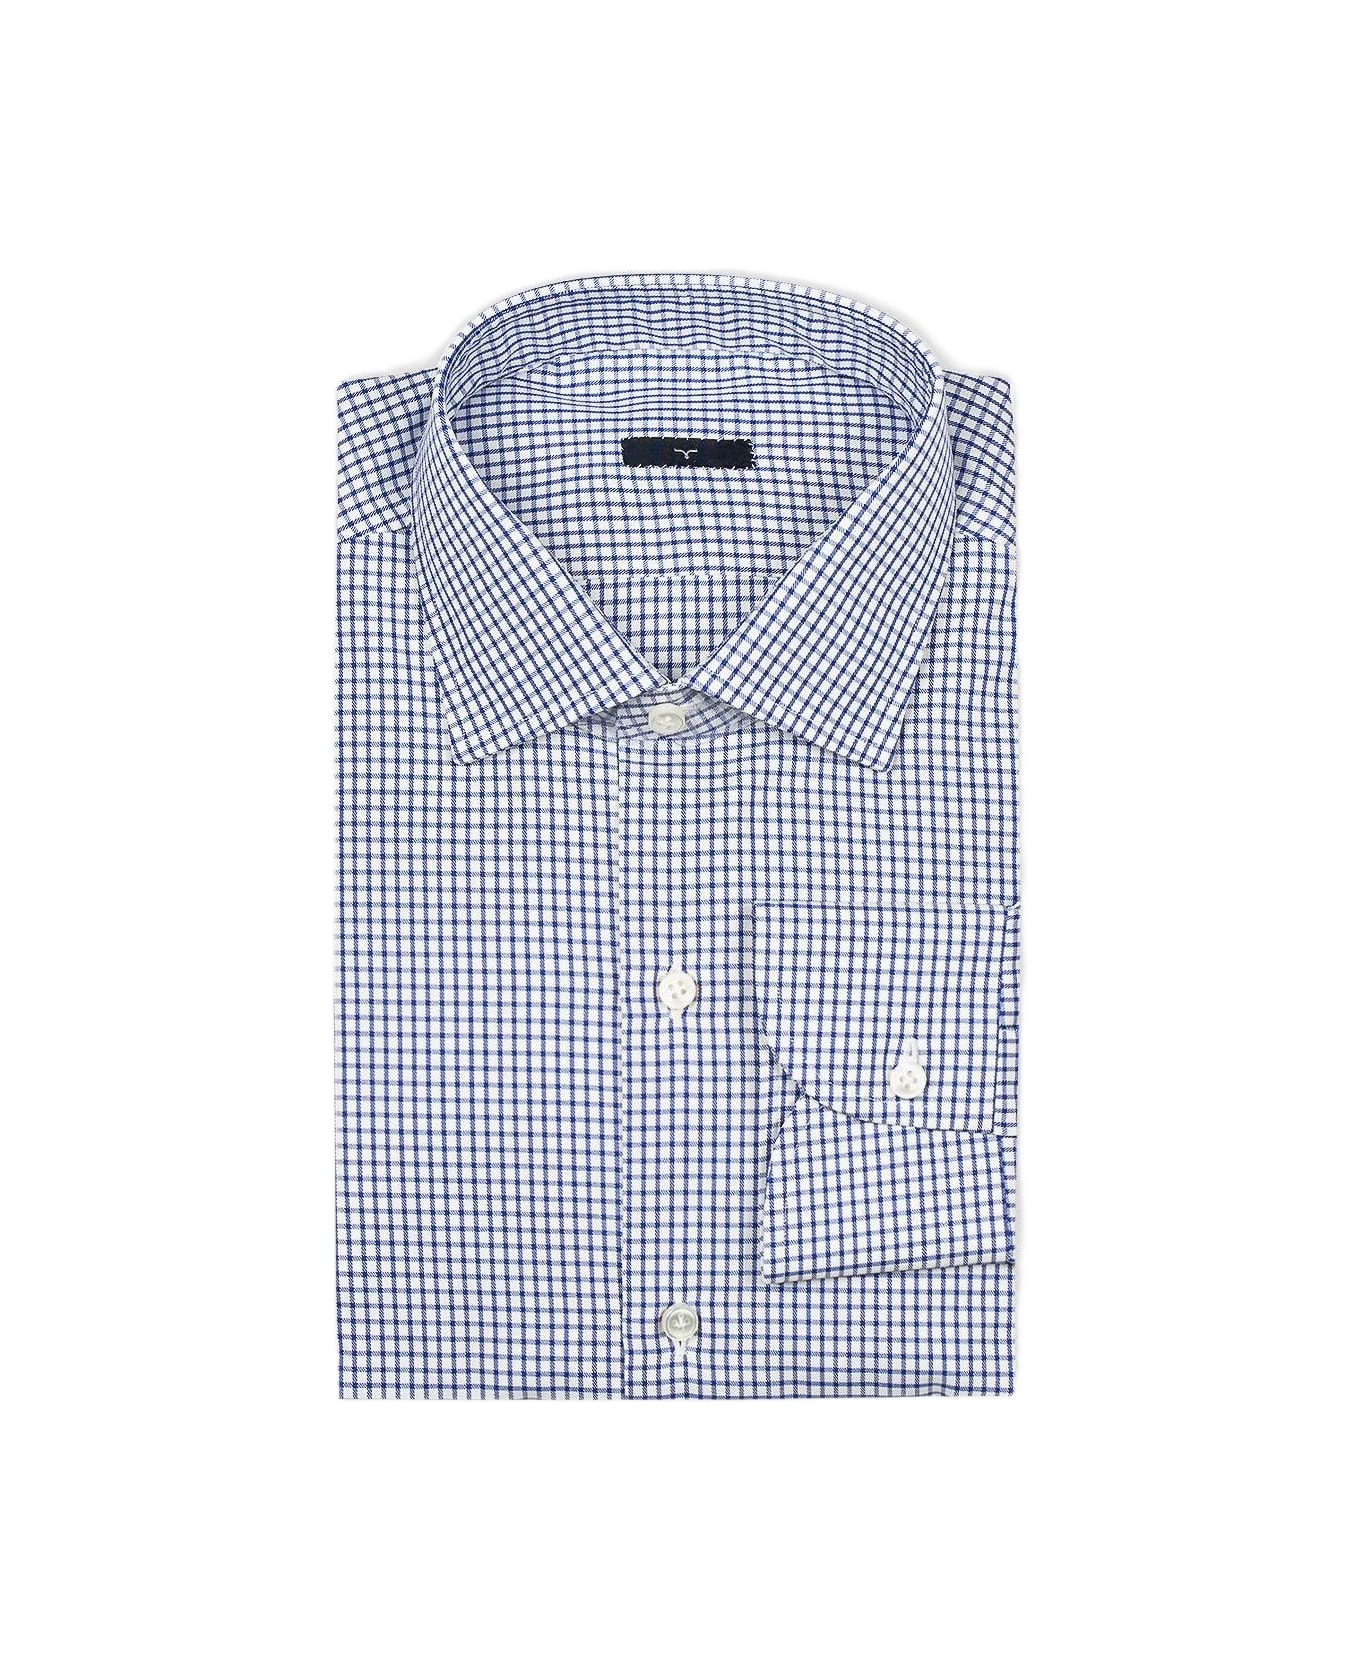 Larusmiani Handmade Shirt 'mayfair Executive' Shirt - White/Blue